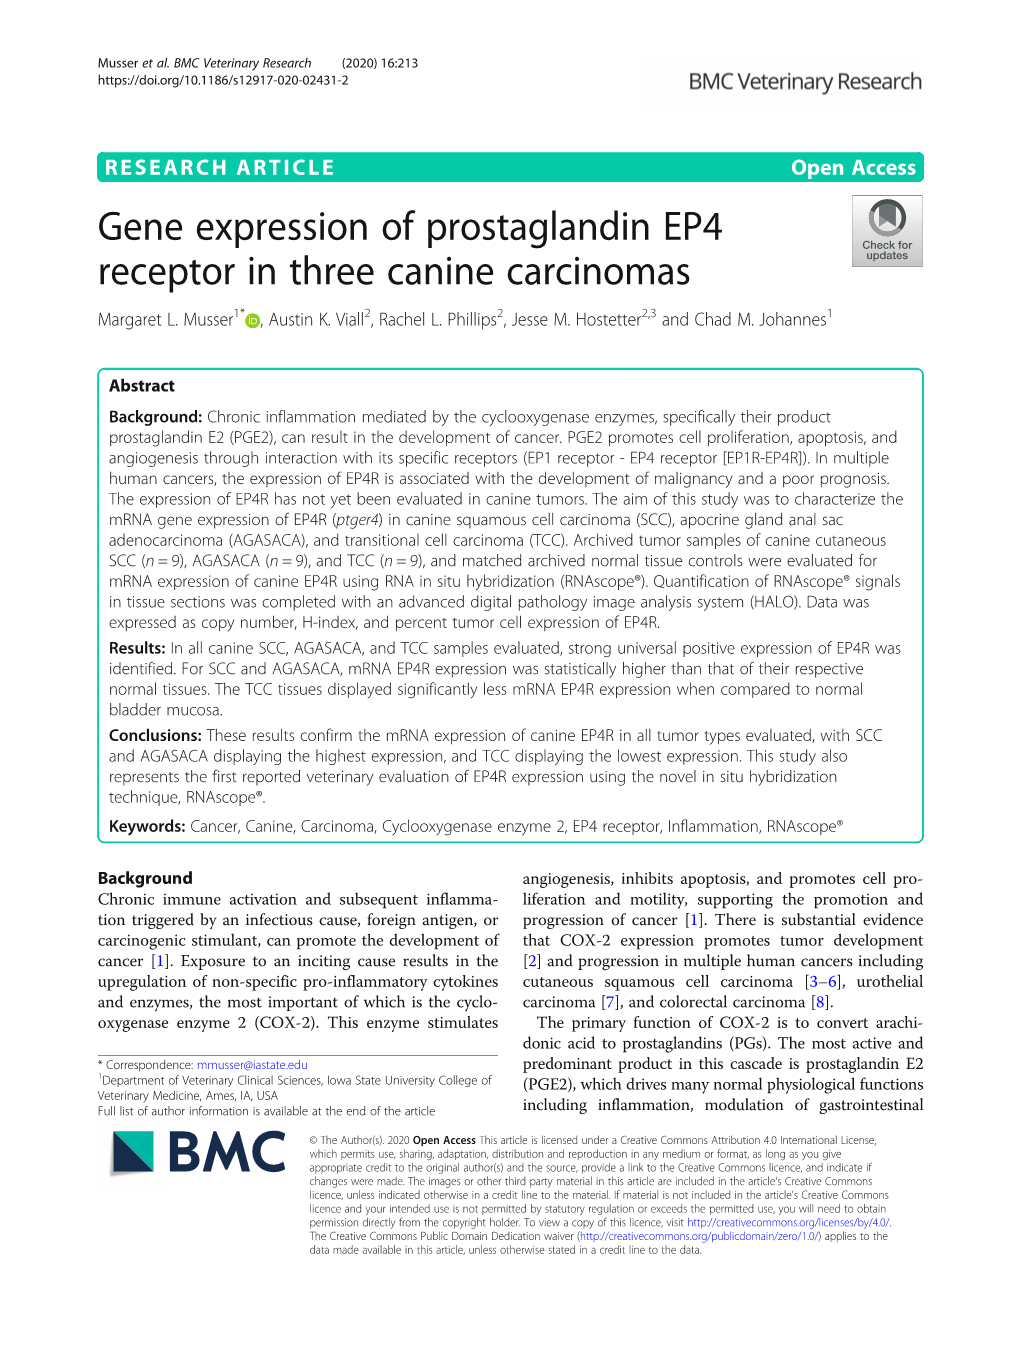 Gene Expression of Prostaglandin EP4 Receptor in Three Canine Carcinomas Margaret L